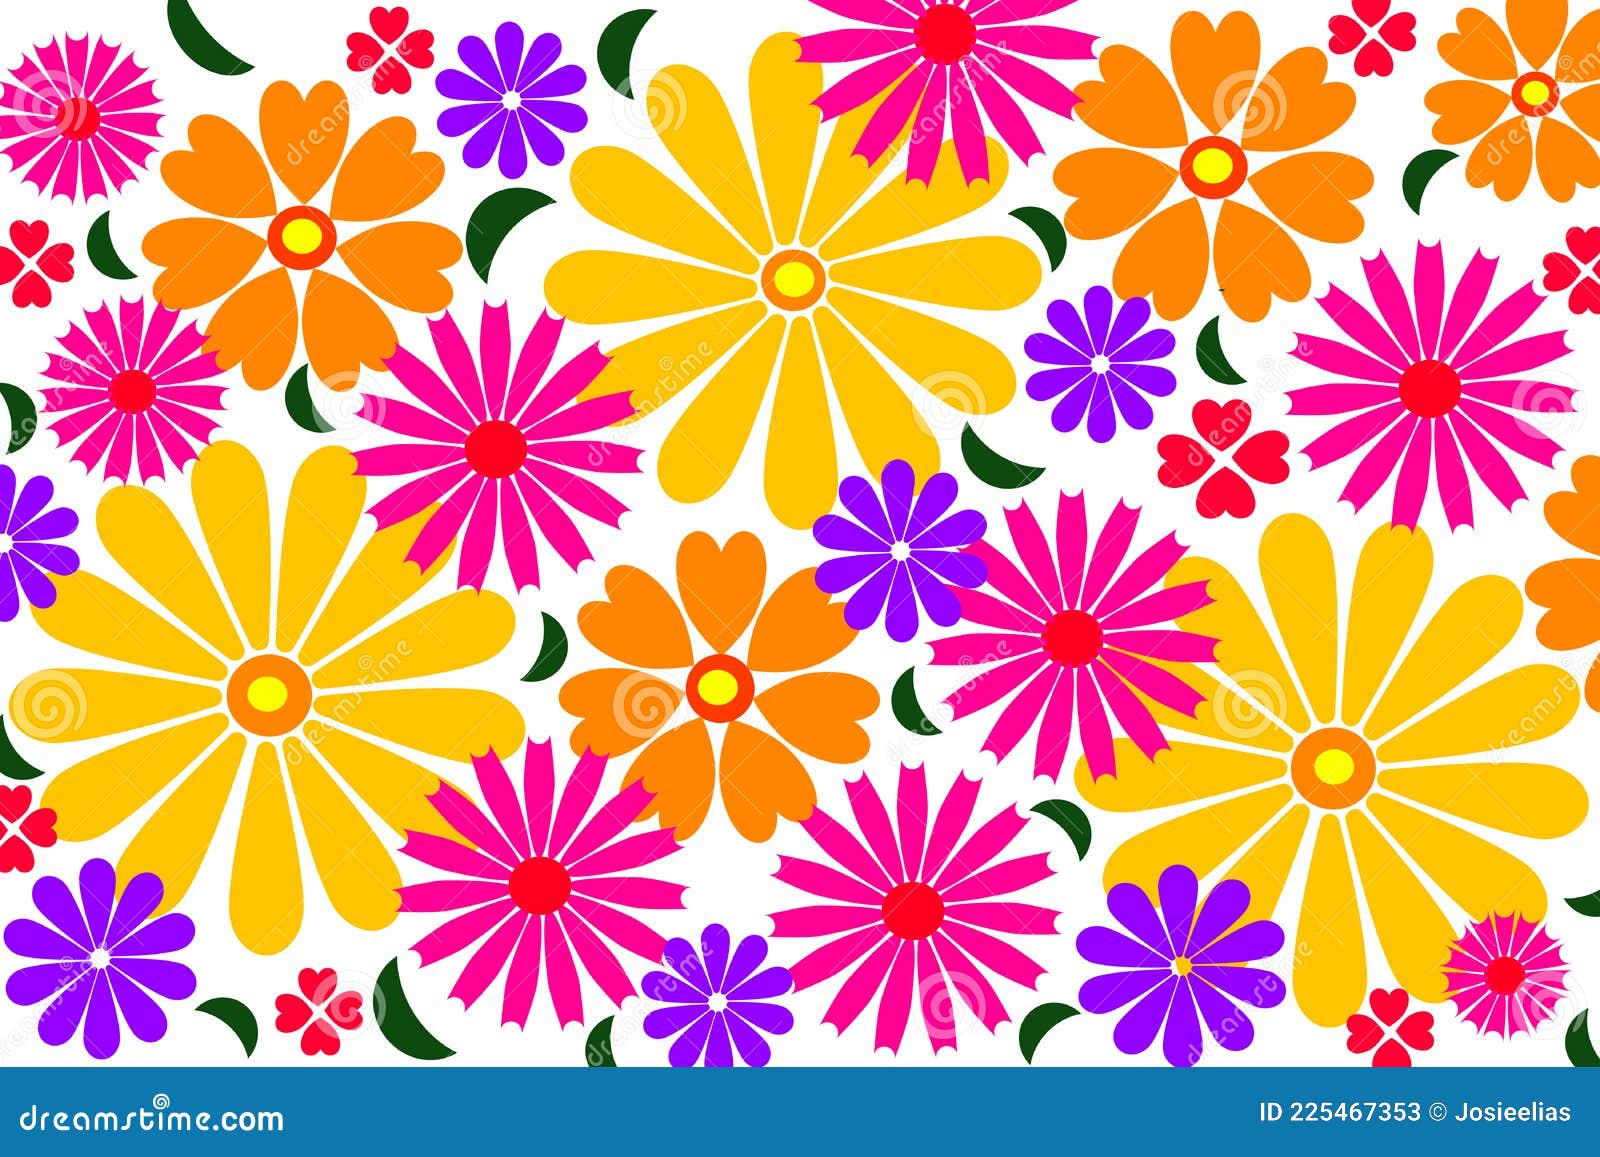 Flower Power, Colourful Nature Wallpaper Stock Illustration ...